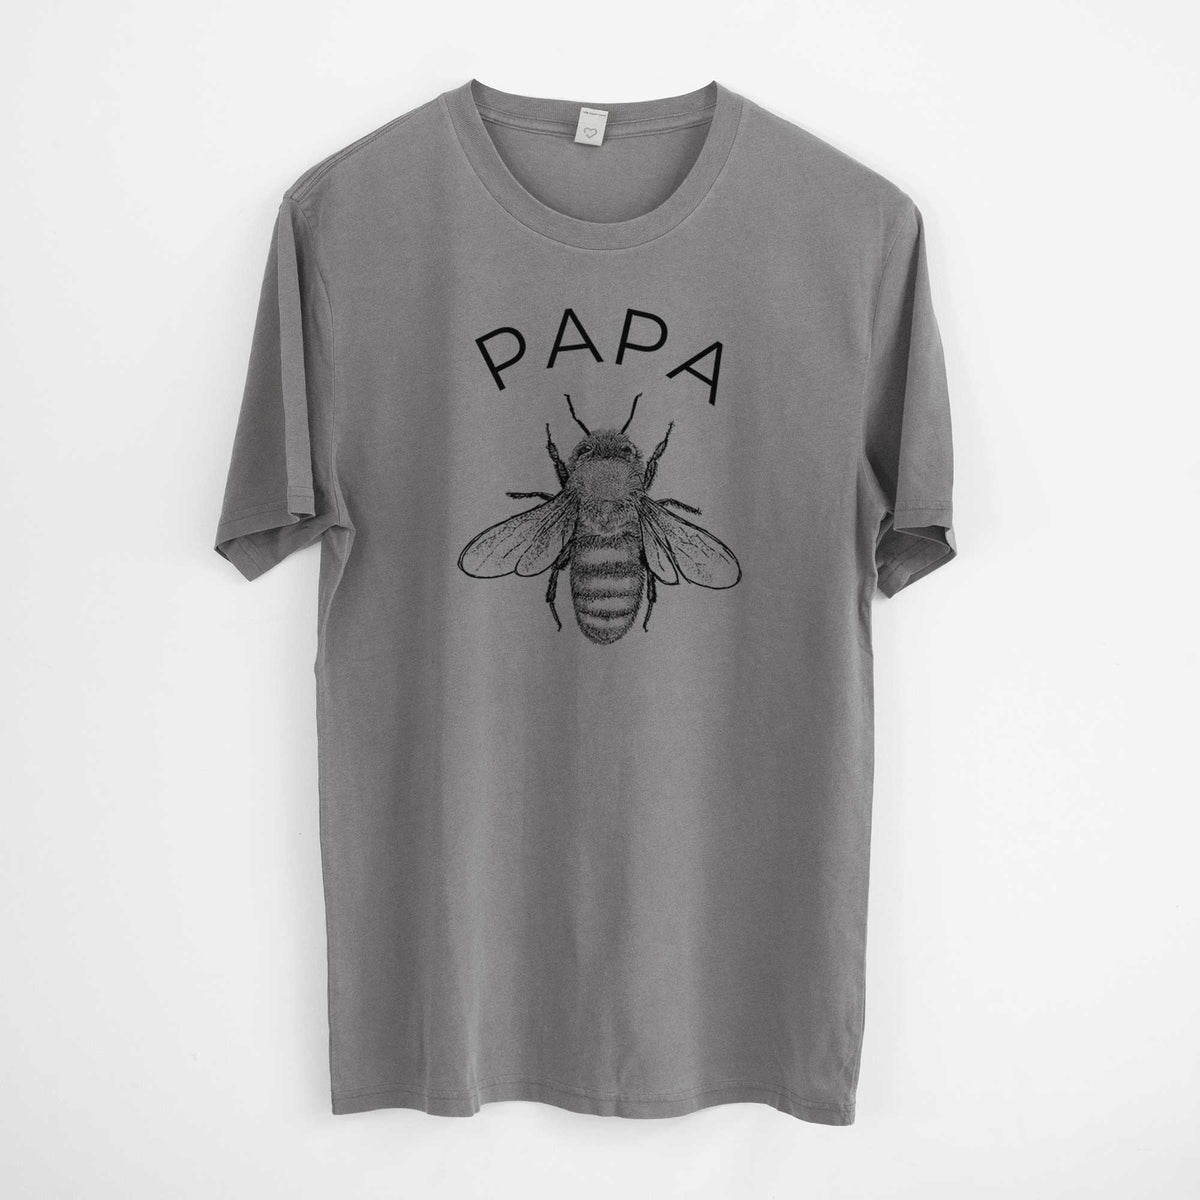 Papa Bee -  Mineral Wash 100% Organic Cotton Short Sleeve